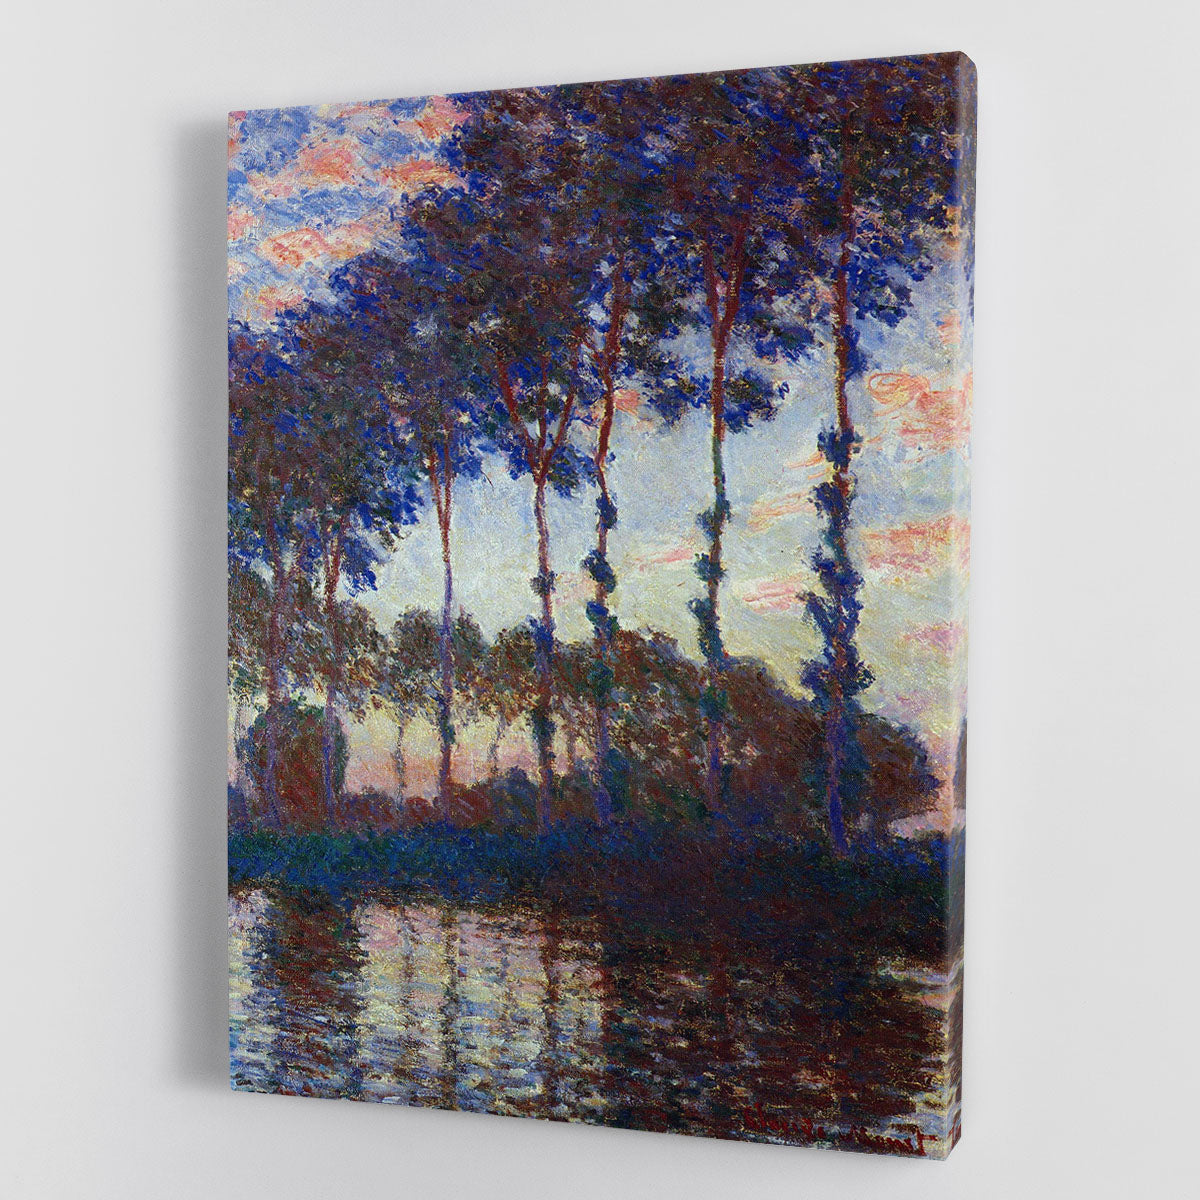 Poplars sunset by Monet Canvas Print or Poster - Canvas Art Rocks - 1